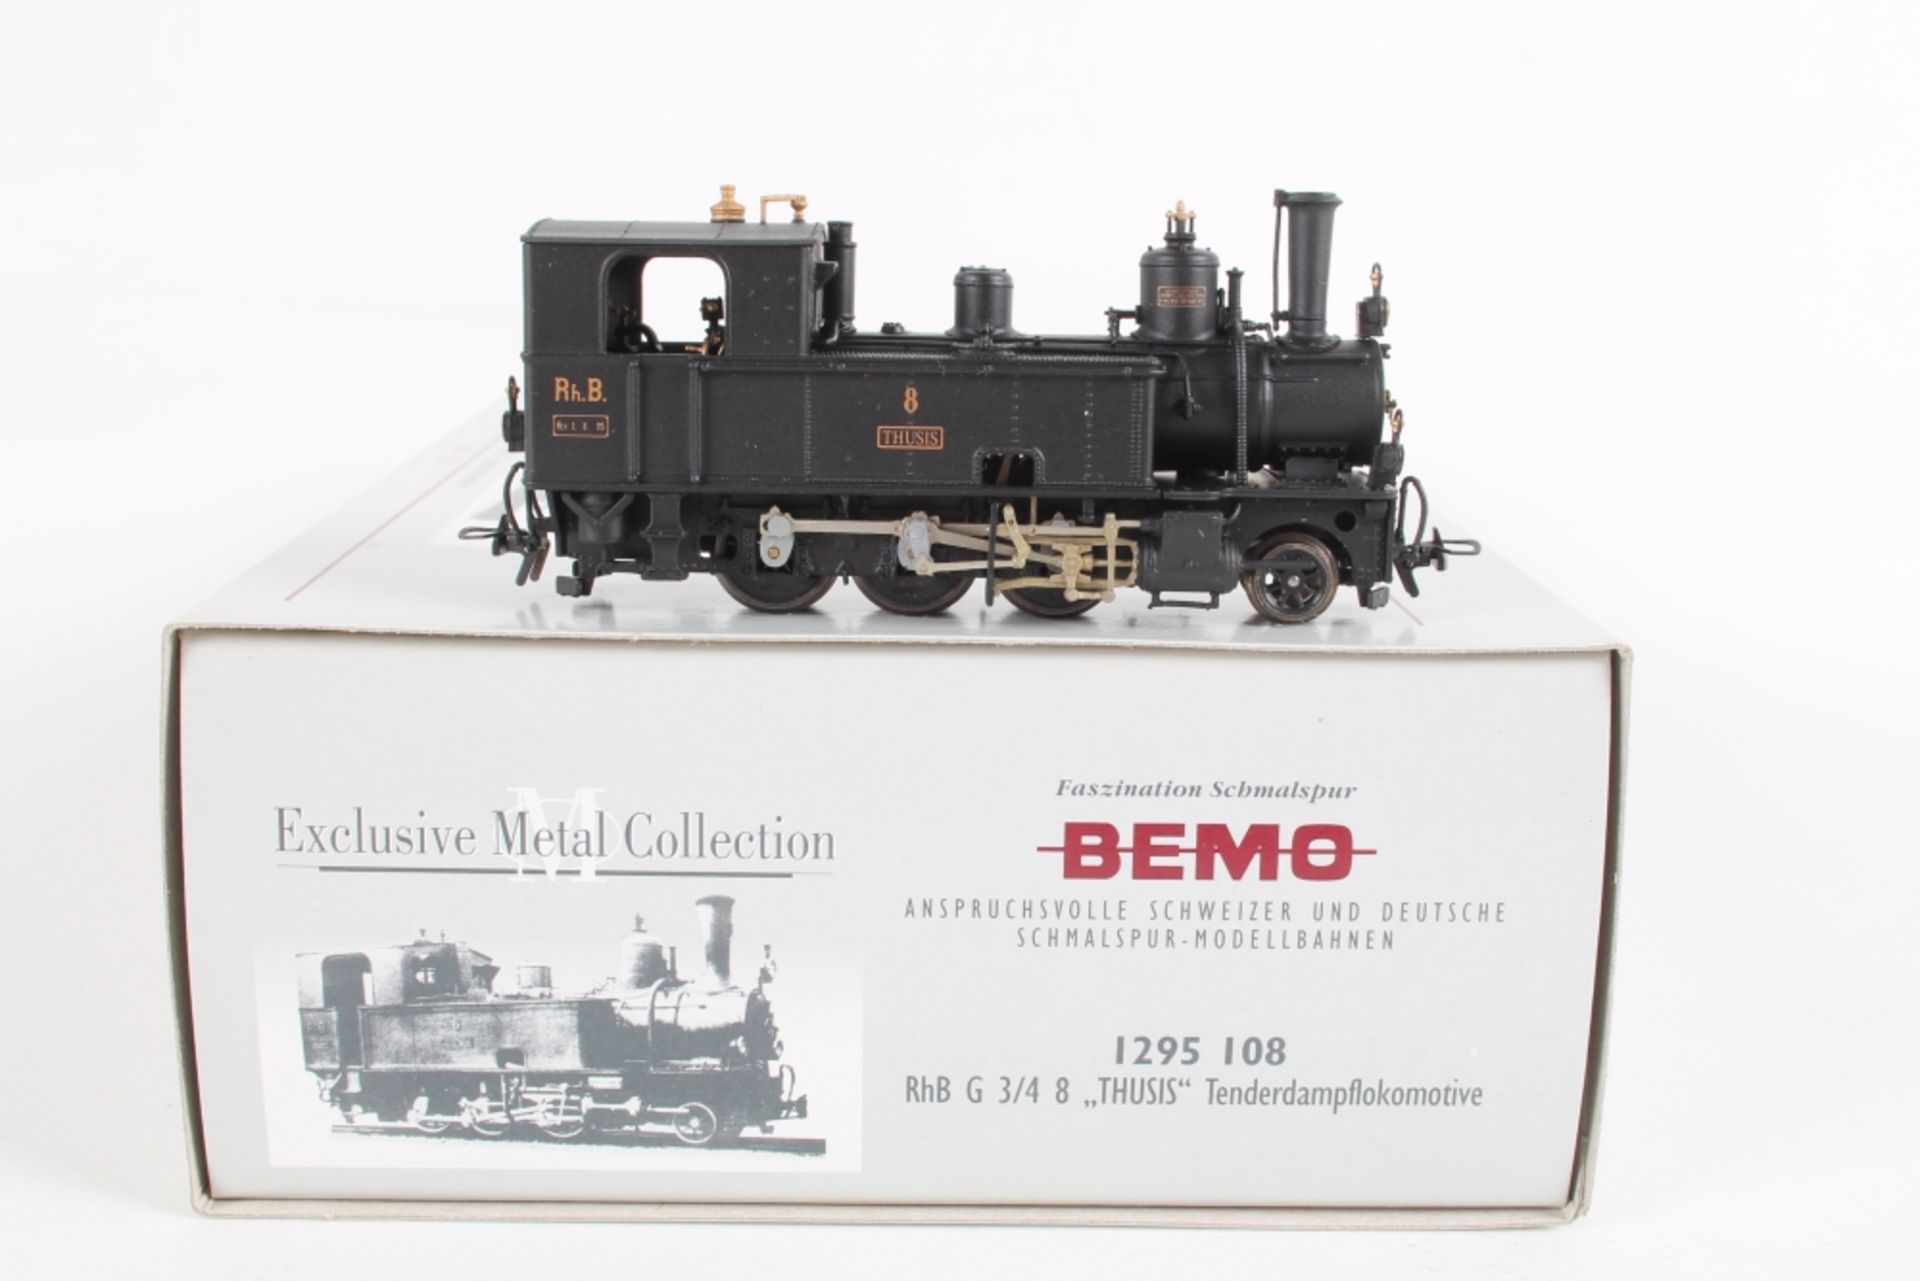 Bemo Exclusiv Metal Collection, 1295 108